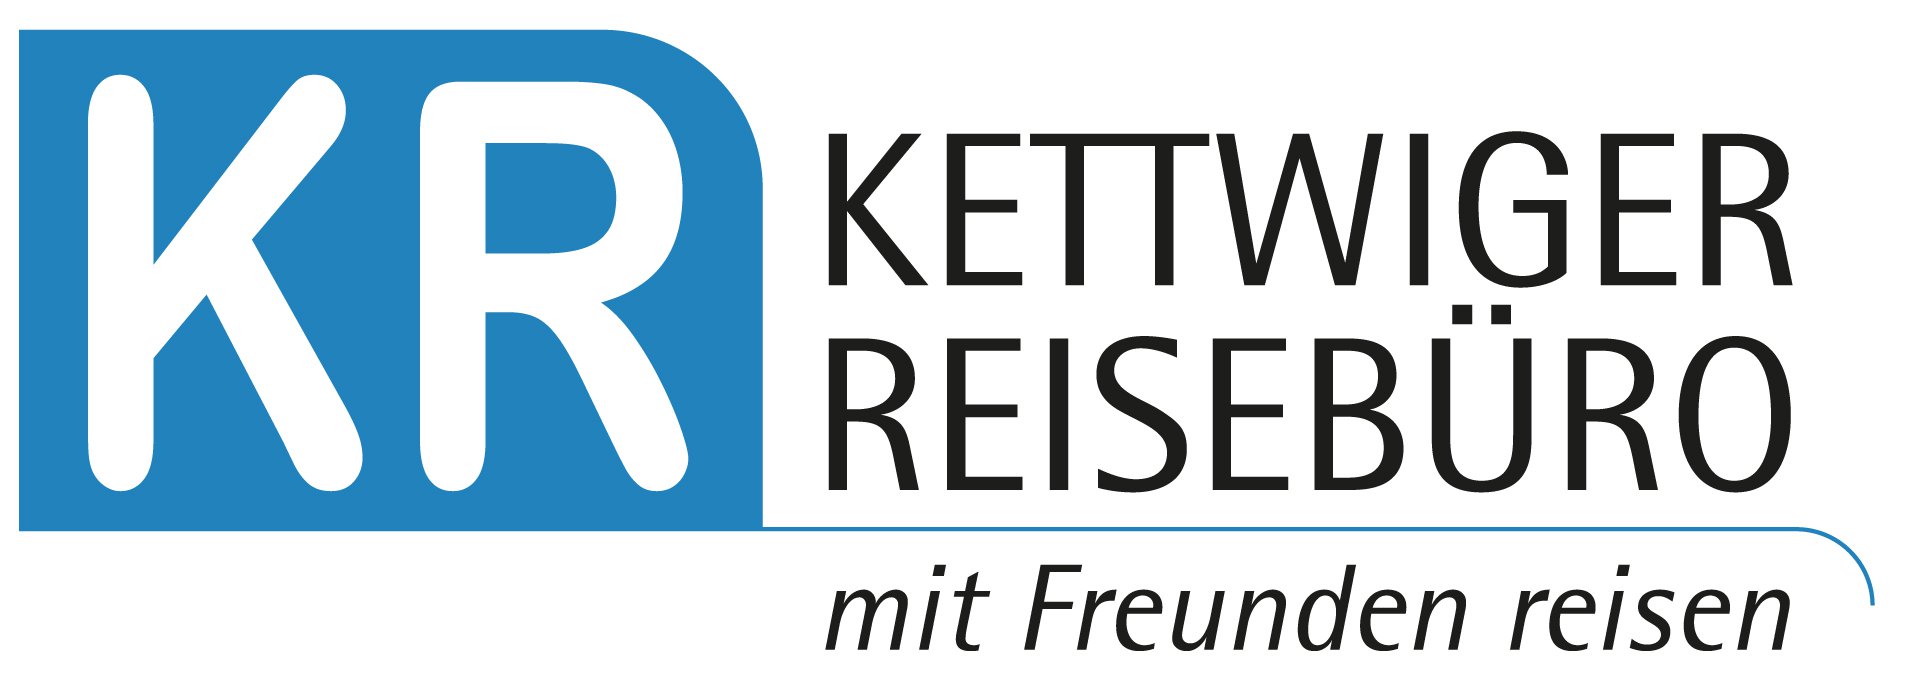 Kettwiger Reisebüro GmbH